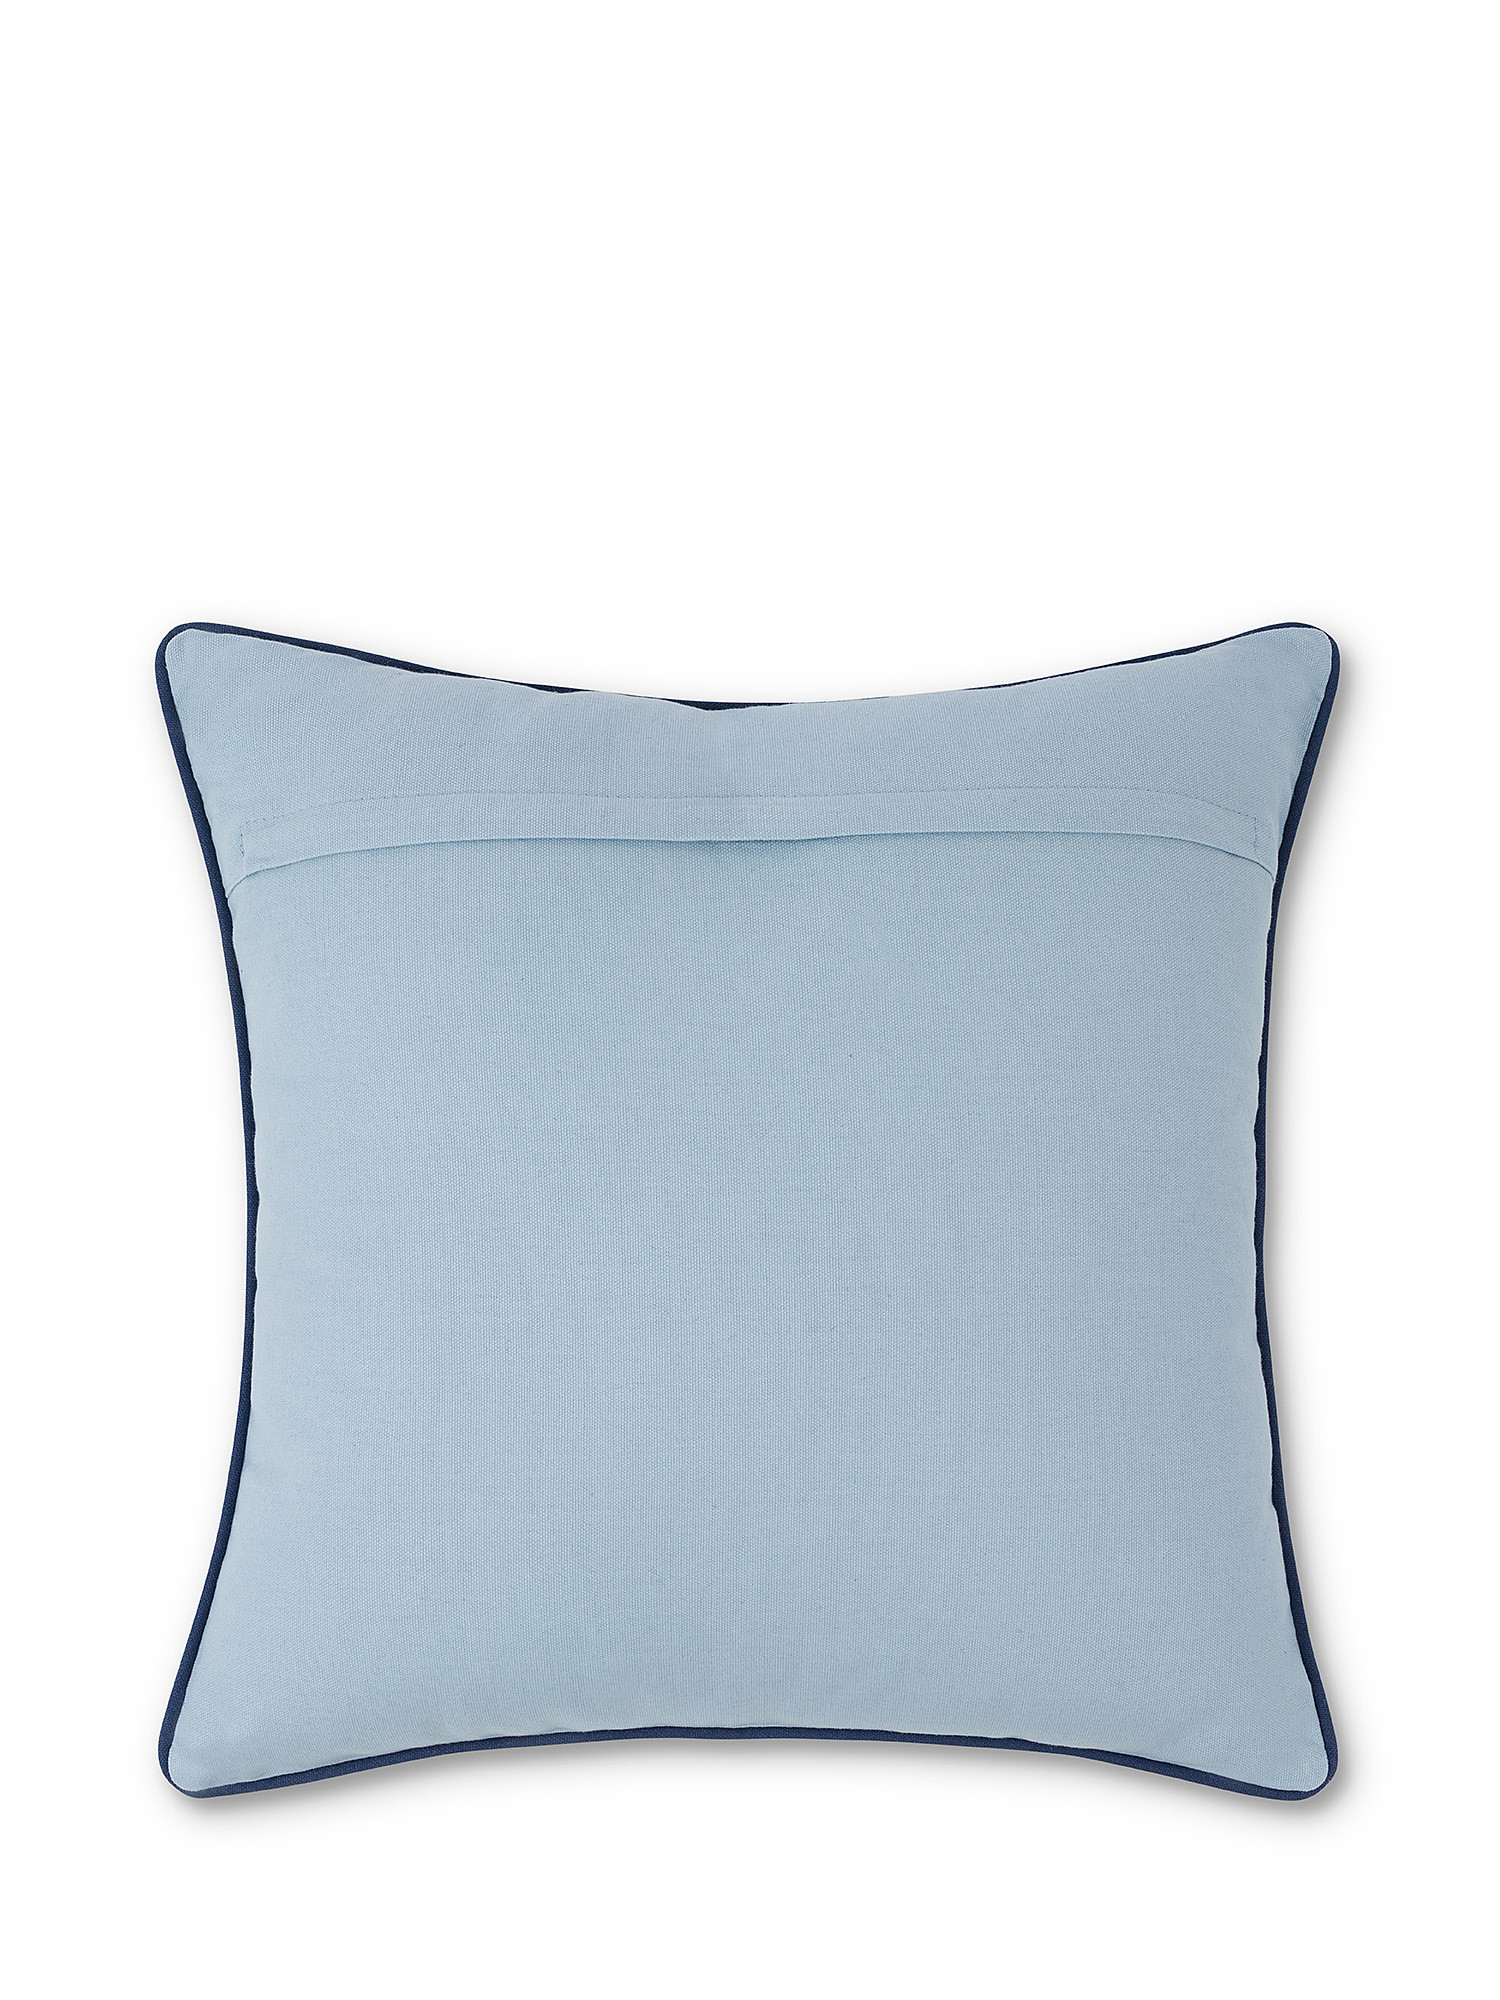 Cuscino cotone ricamo marino 45x45cm, Azzurro, large image number 1